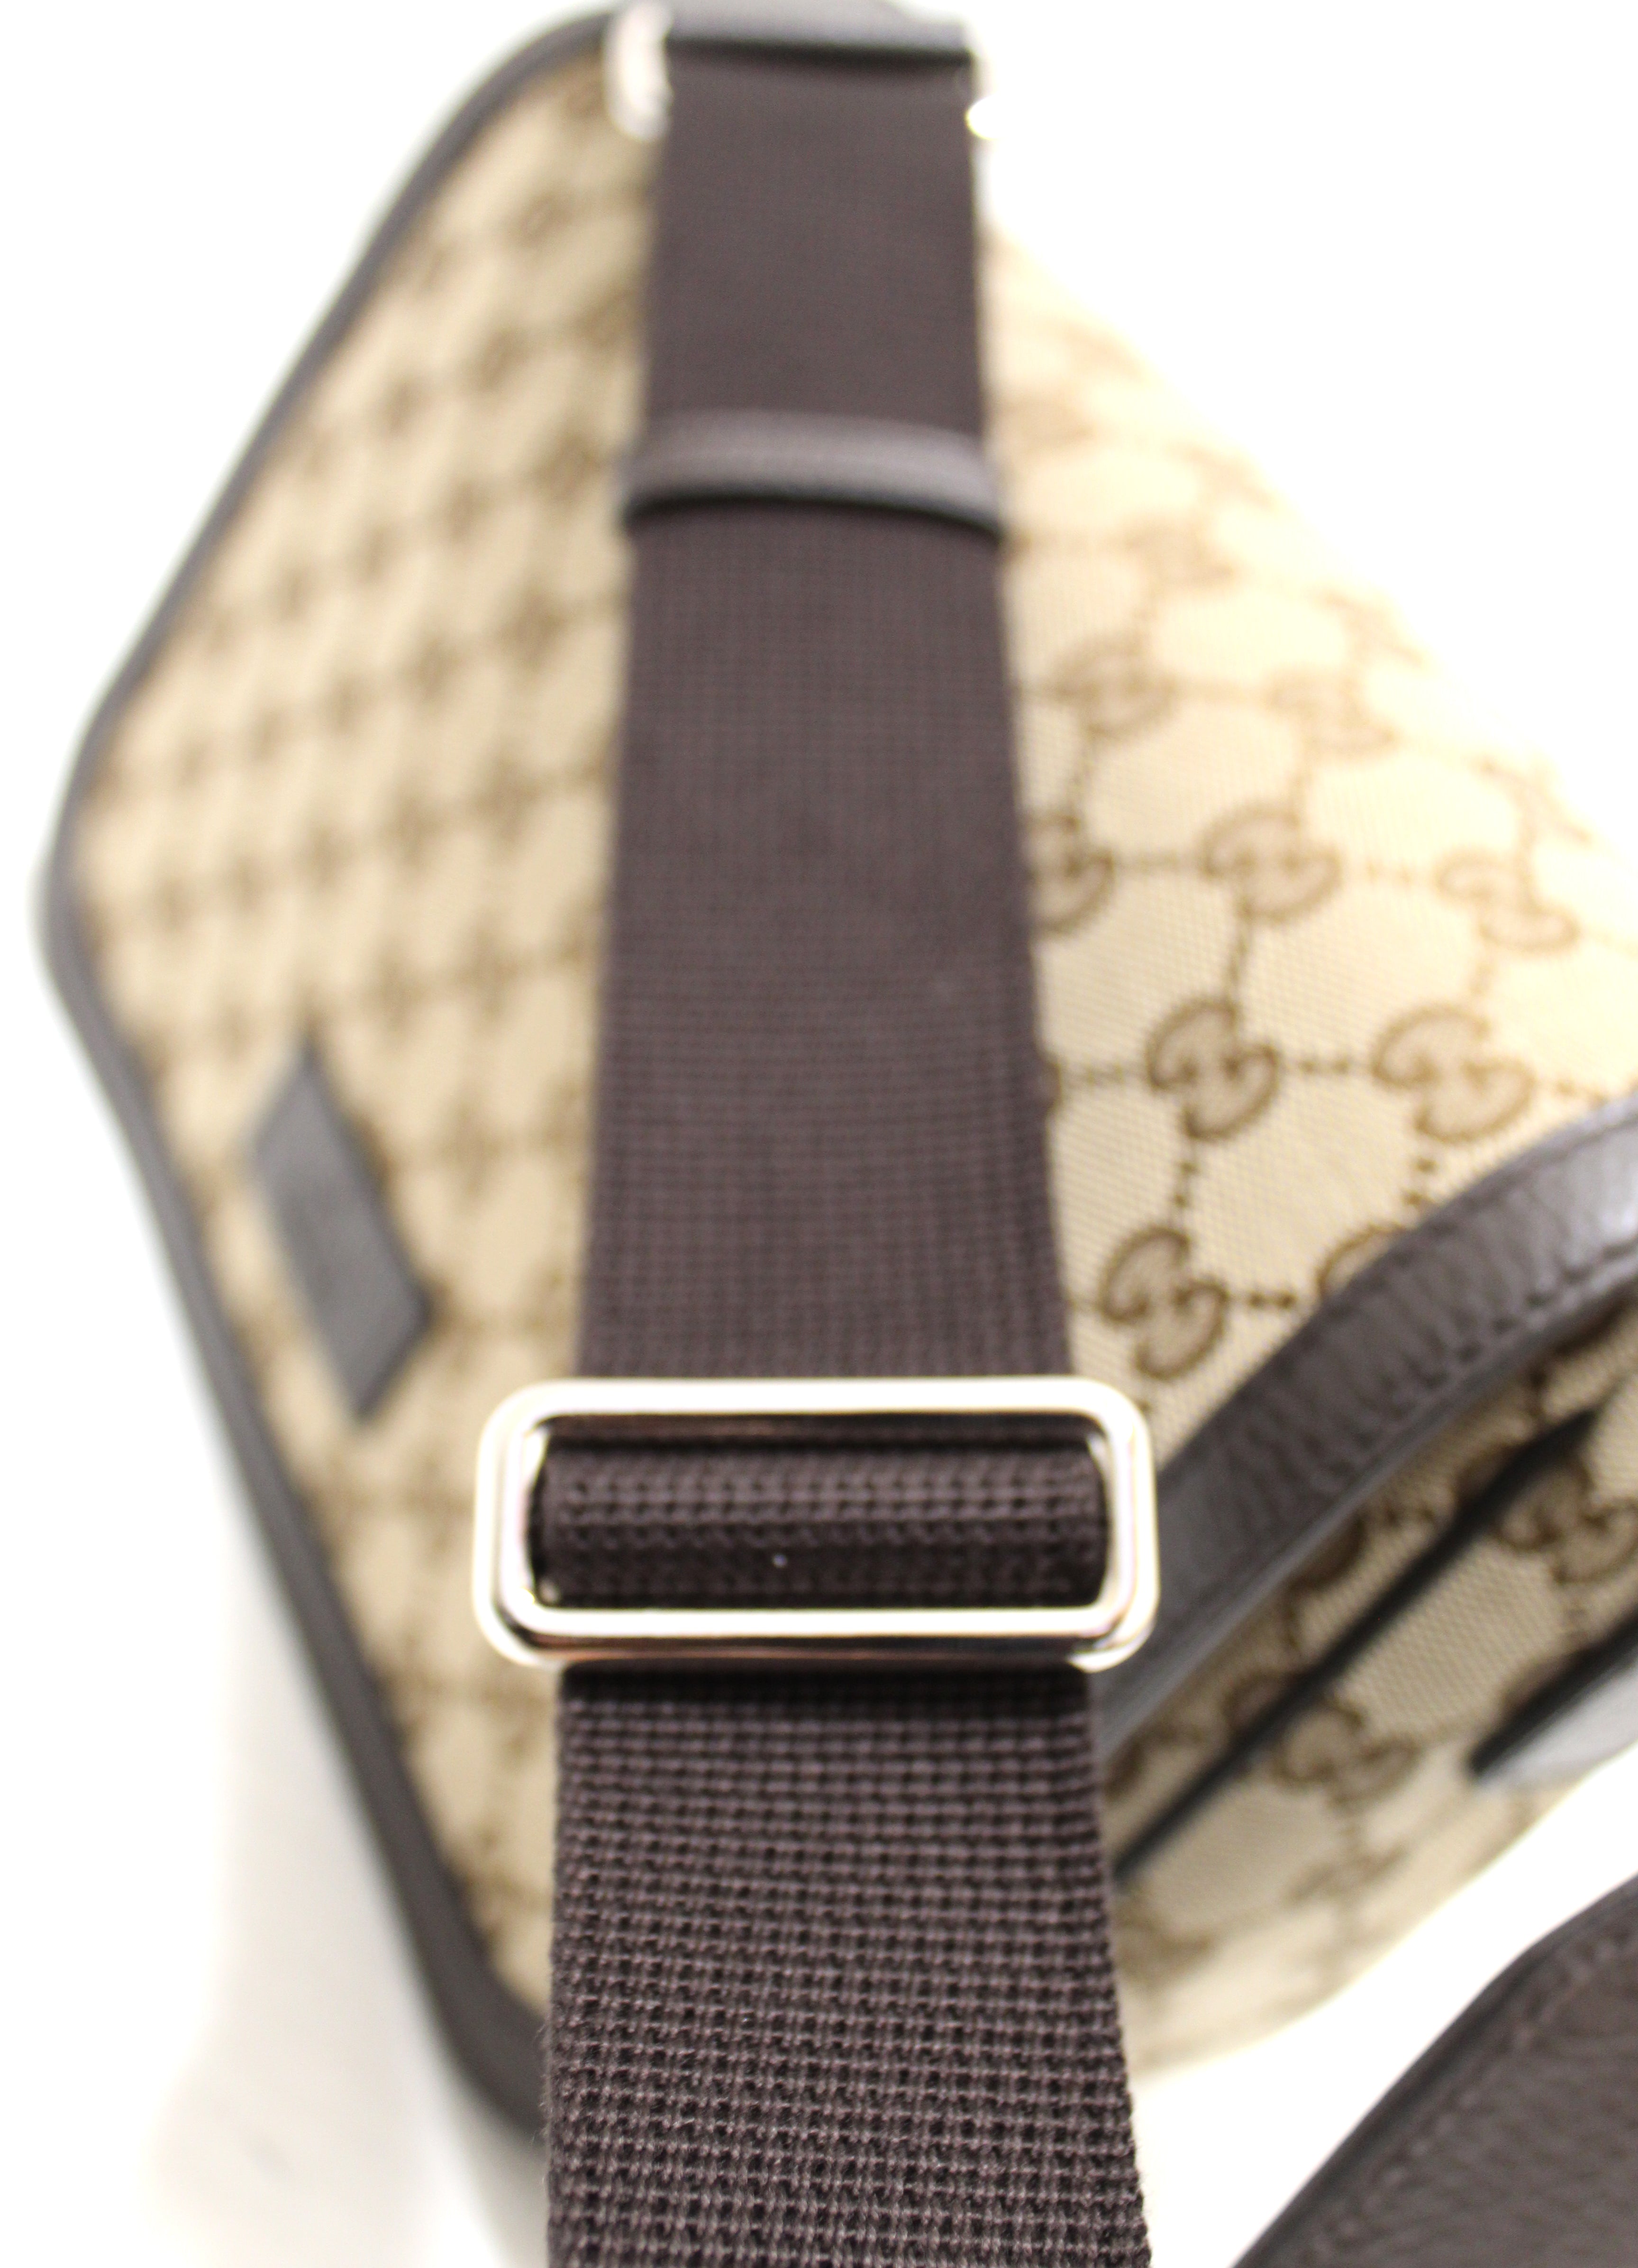 Gucci Original GG Canvas Cross Body Unisex Messenger Bag 449172 